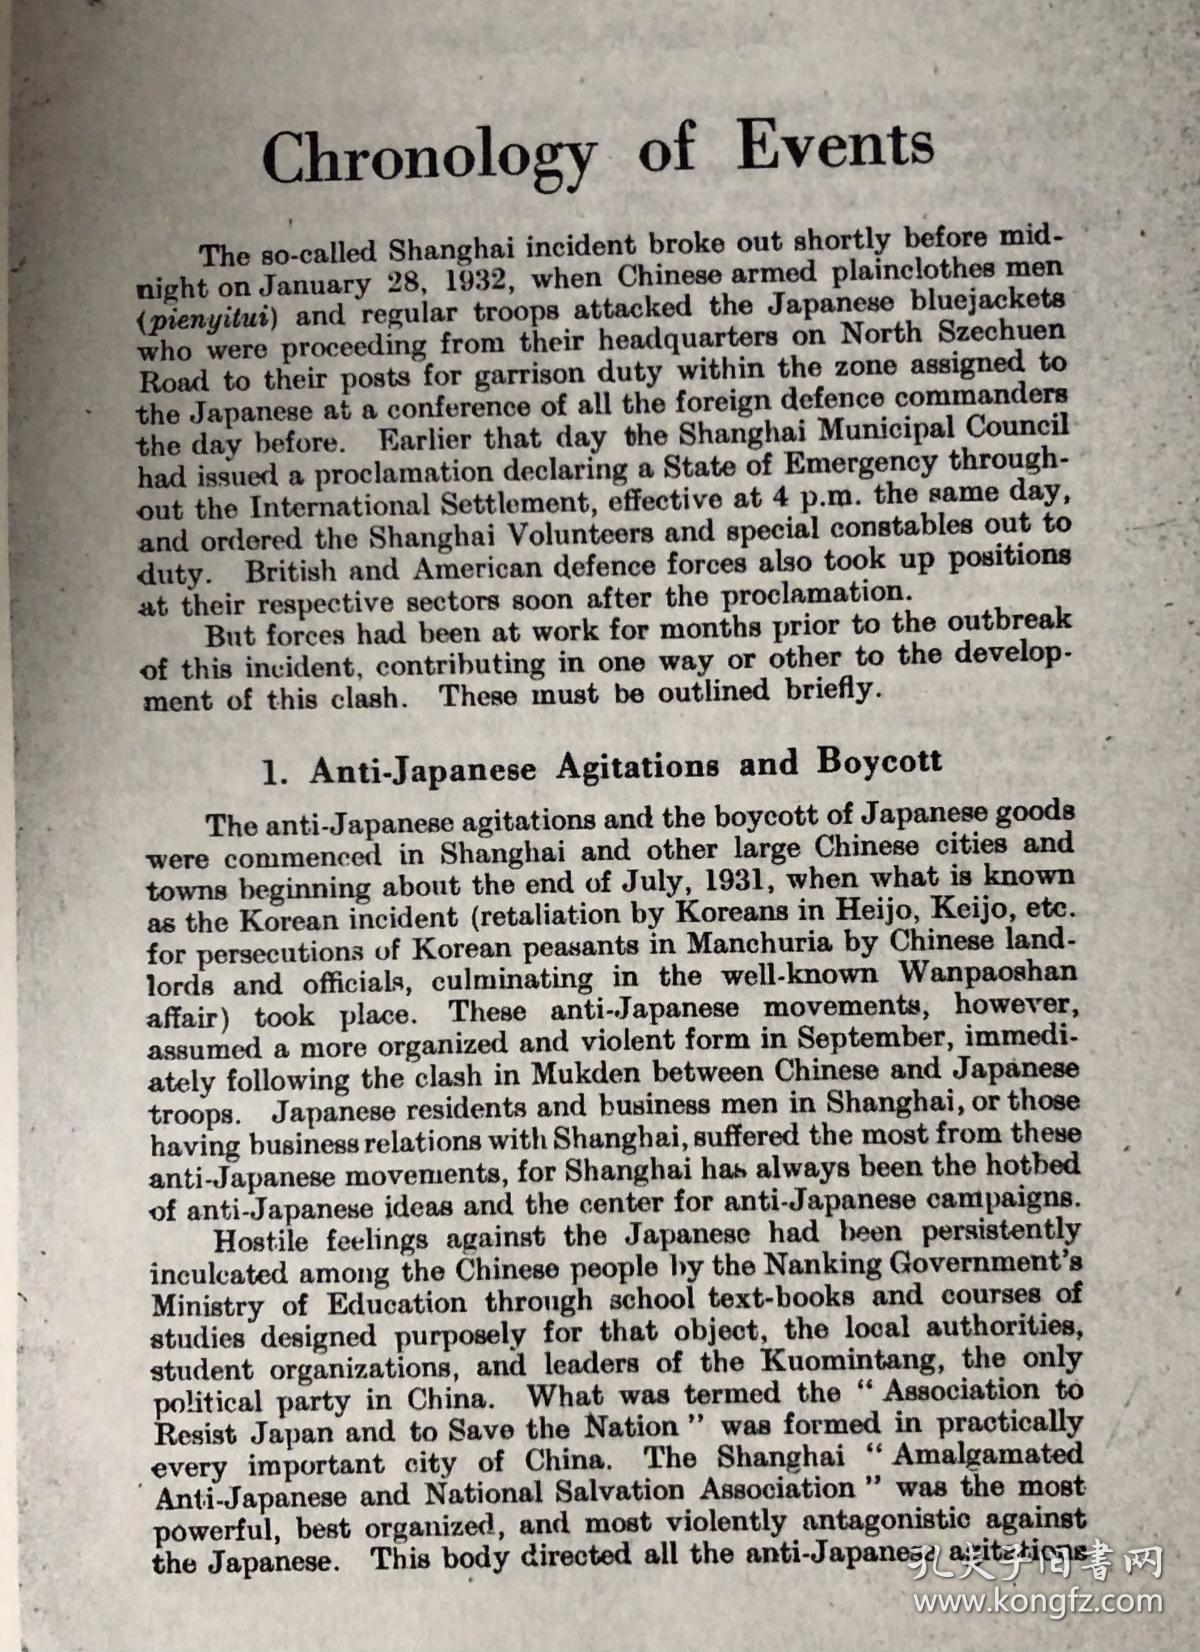 THE SHANGHAI INCIDENT（上海事变，英文版，多图，1932年）